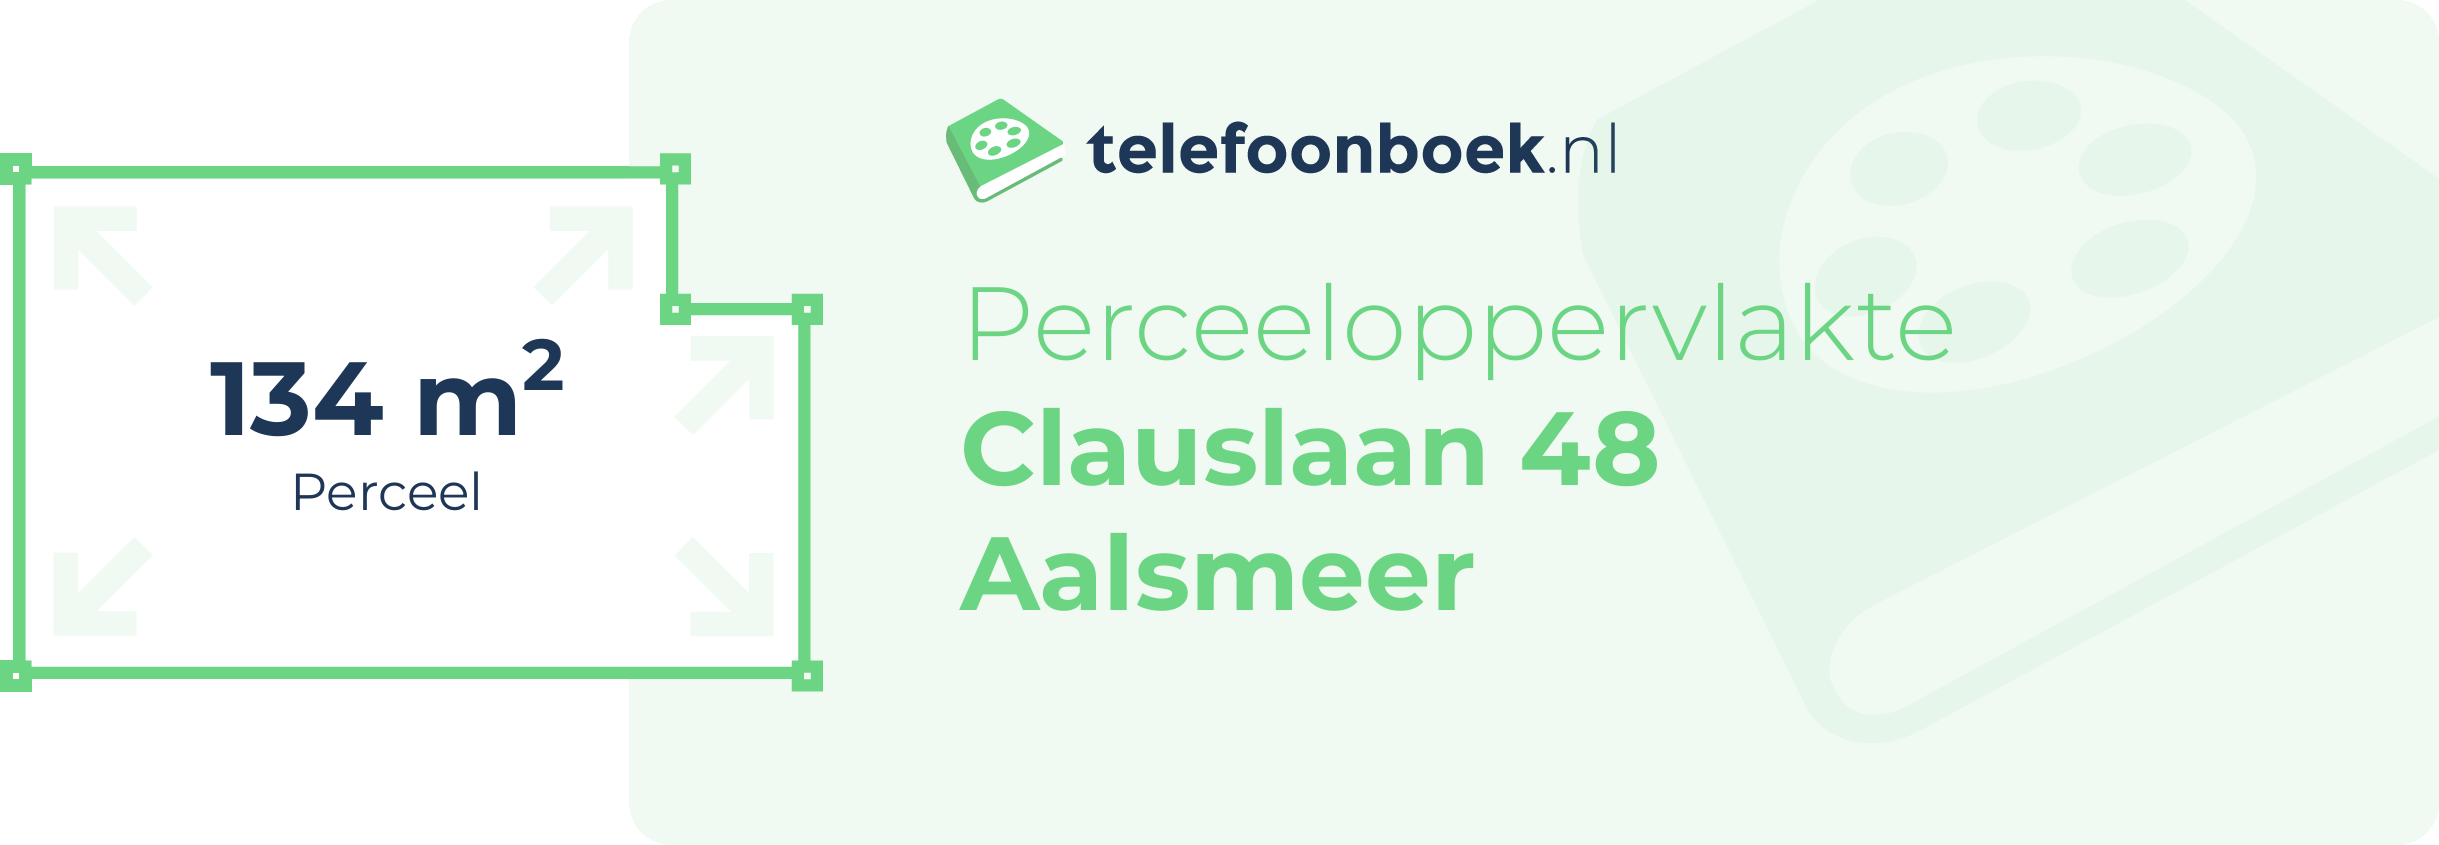 Perceeloppervlakte Clauslaan 48 Aalsmeer